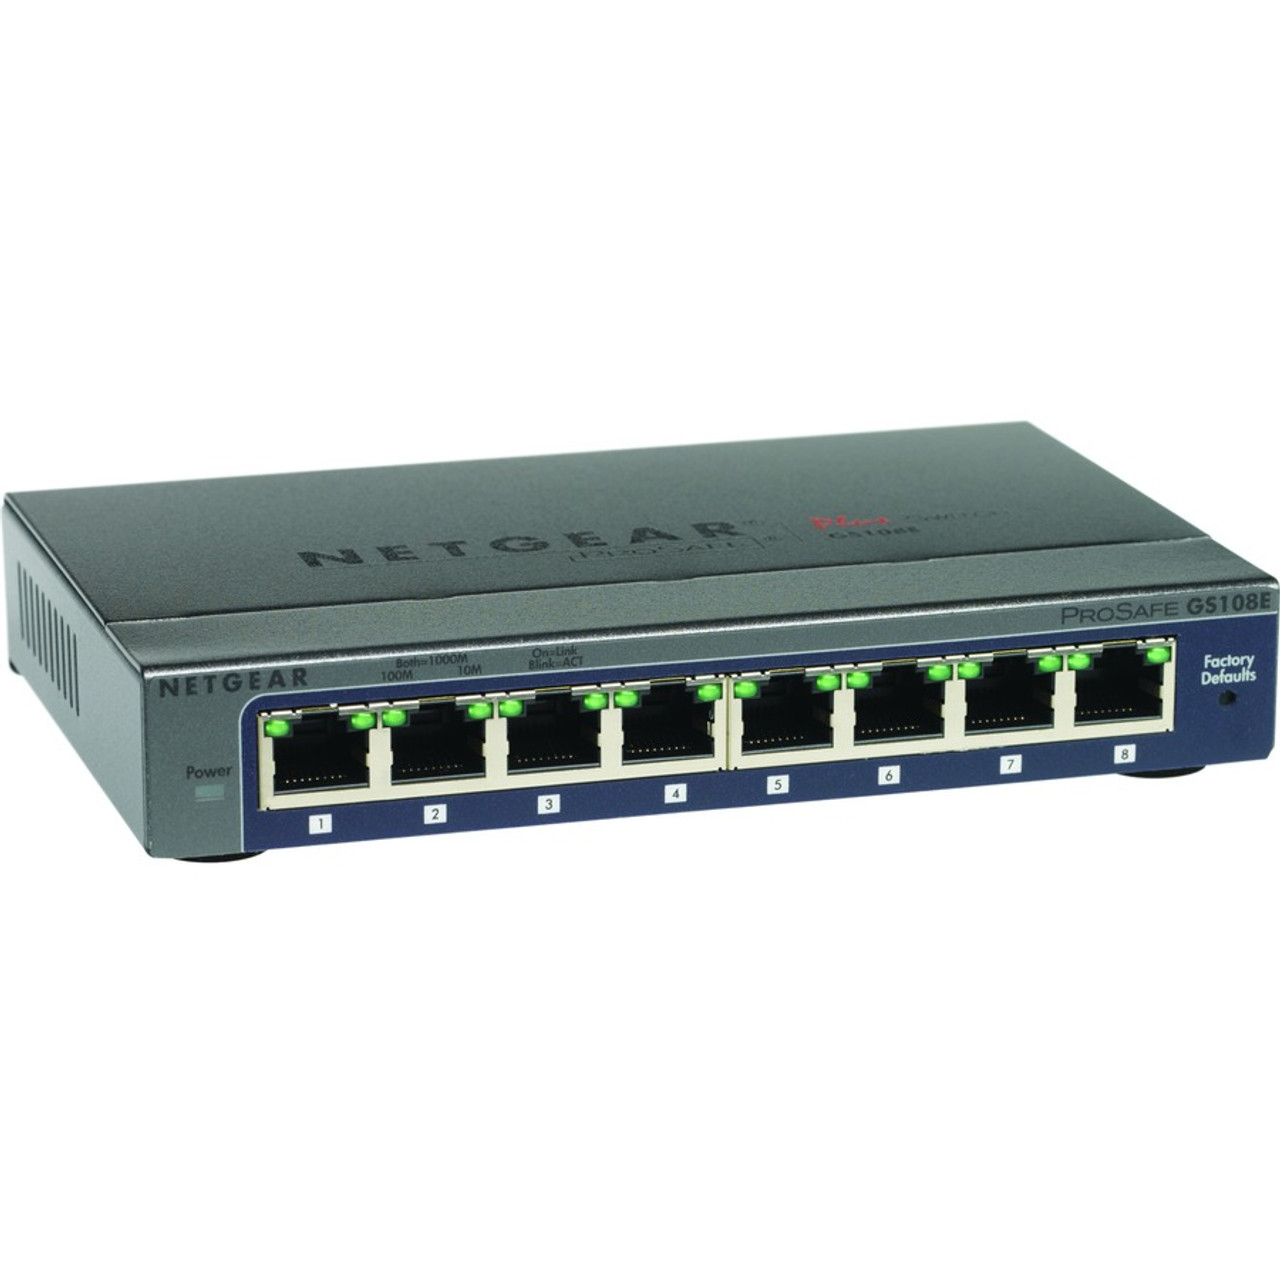 Netgear ProSafe GS108 Ethernet Switch - GS108-400NAS - Modular Switches 